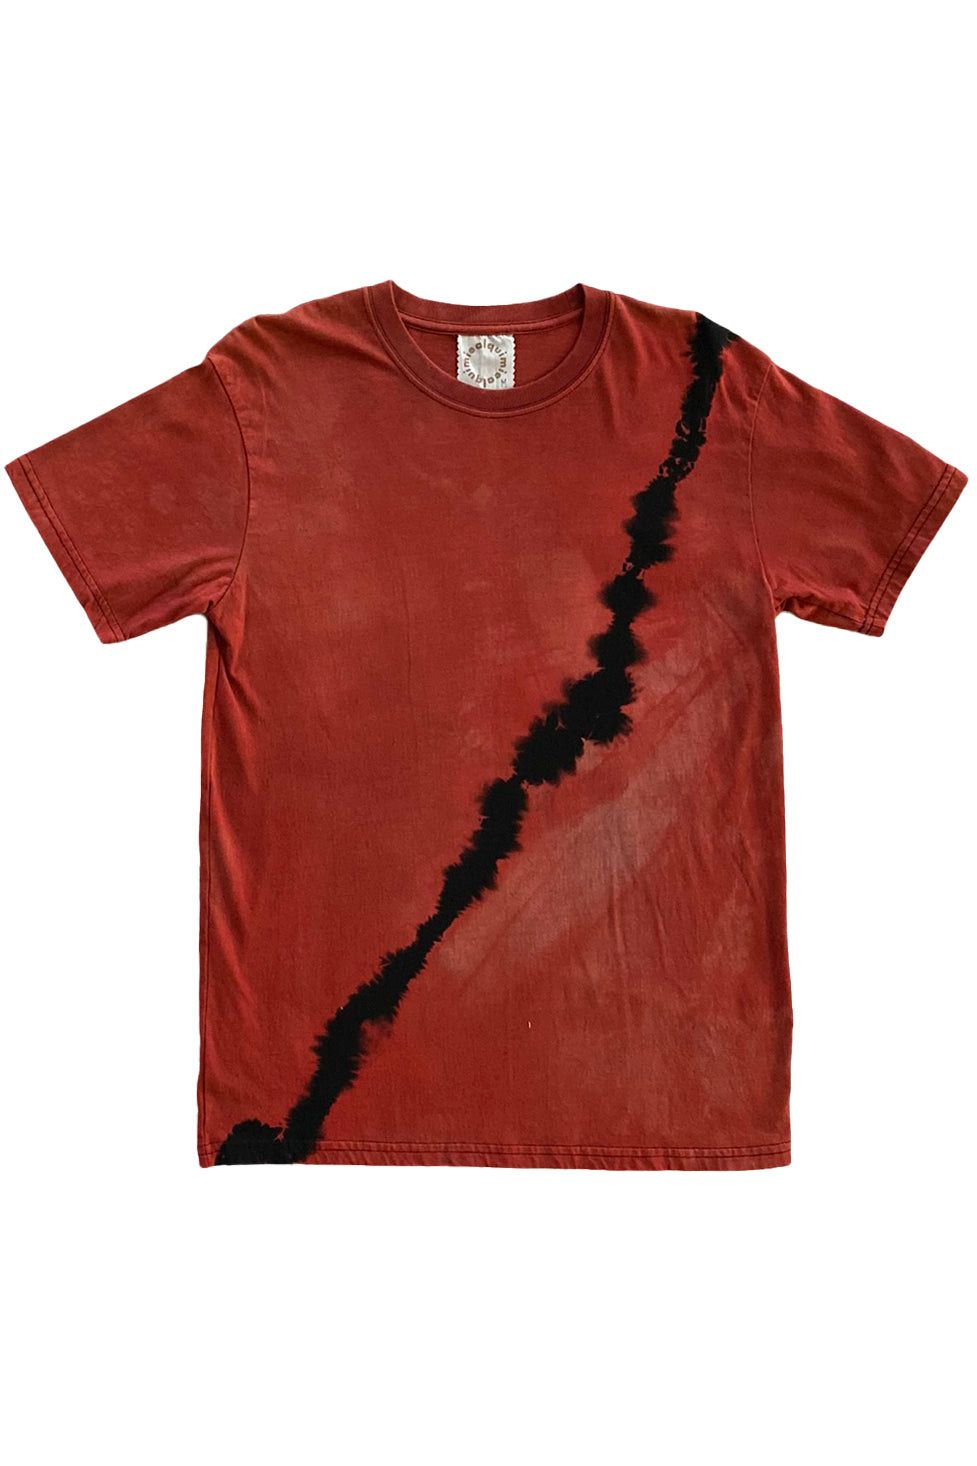 KB x Alquimie Studio Dyed T-Shirt - Red & Black - Unisex M